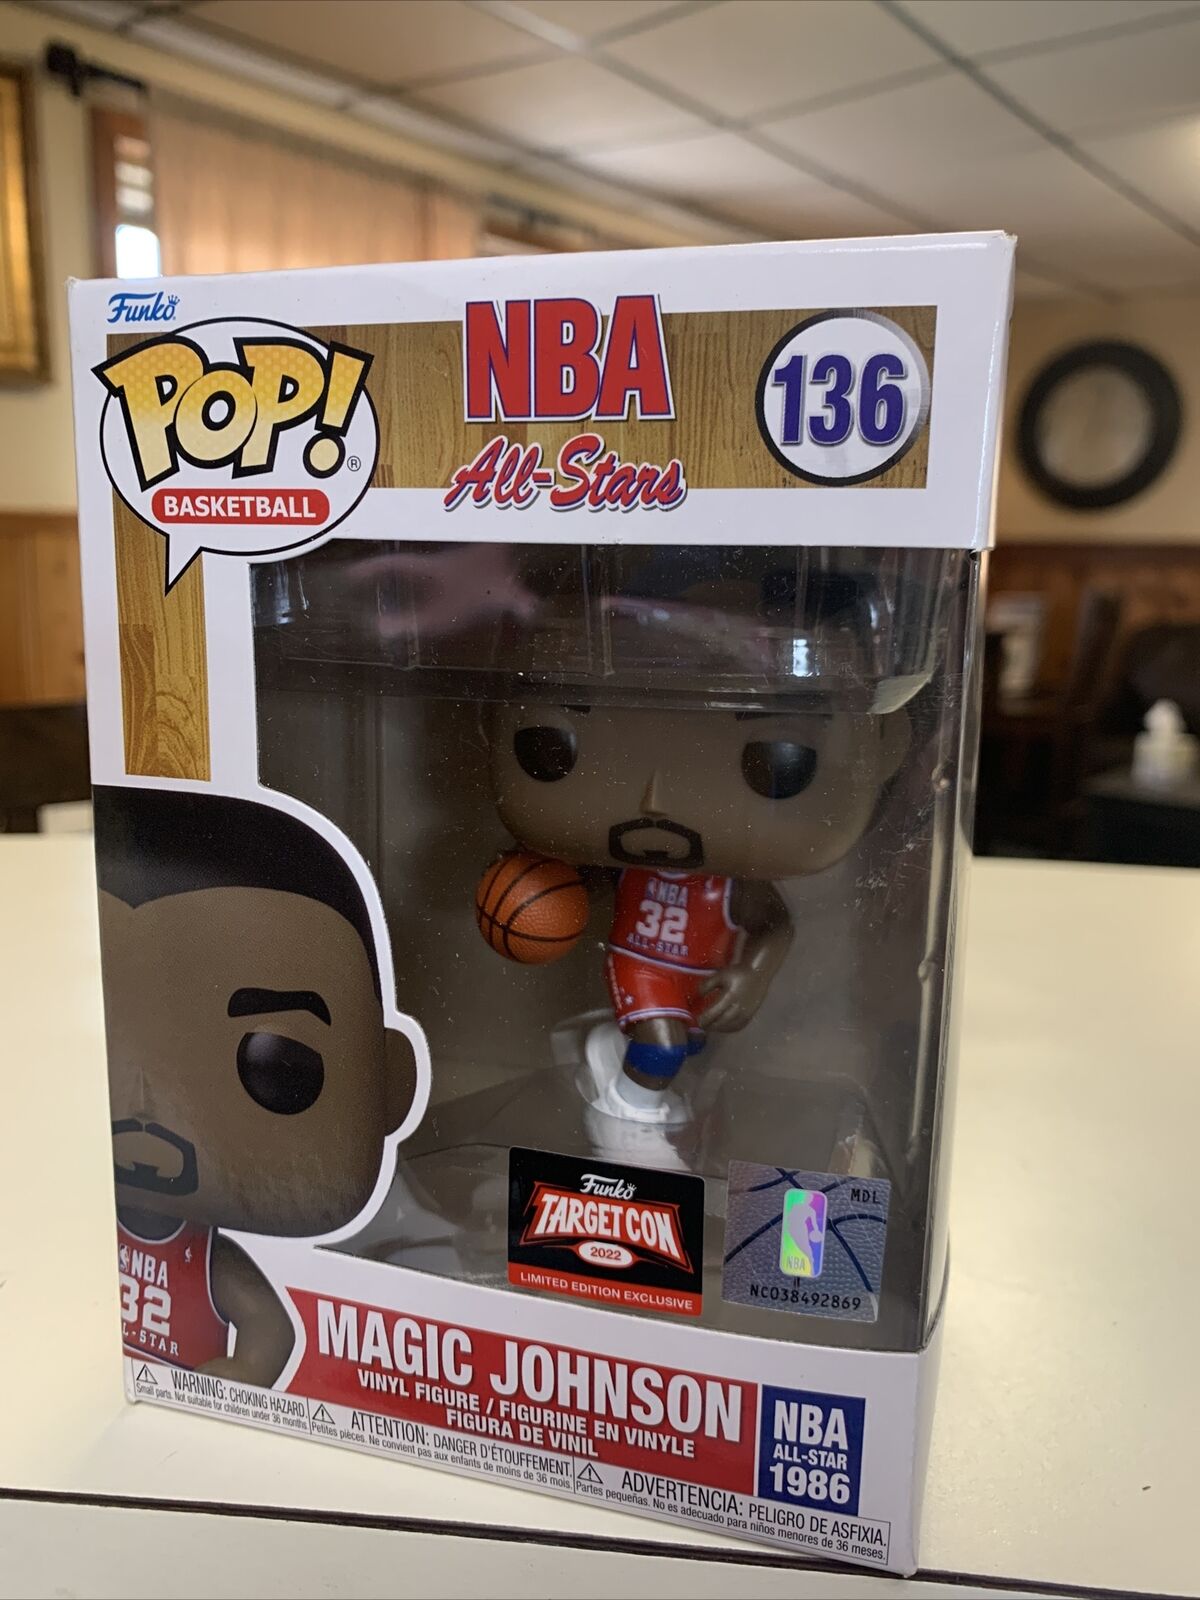 Funko POP NBA Legends Magic Johnson #136 targetcon exclusive